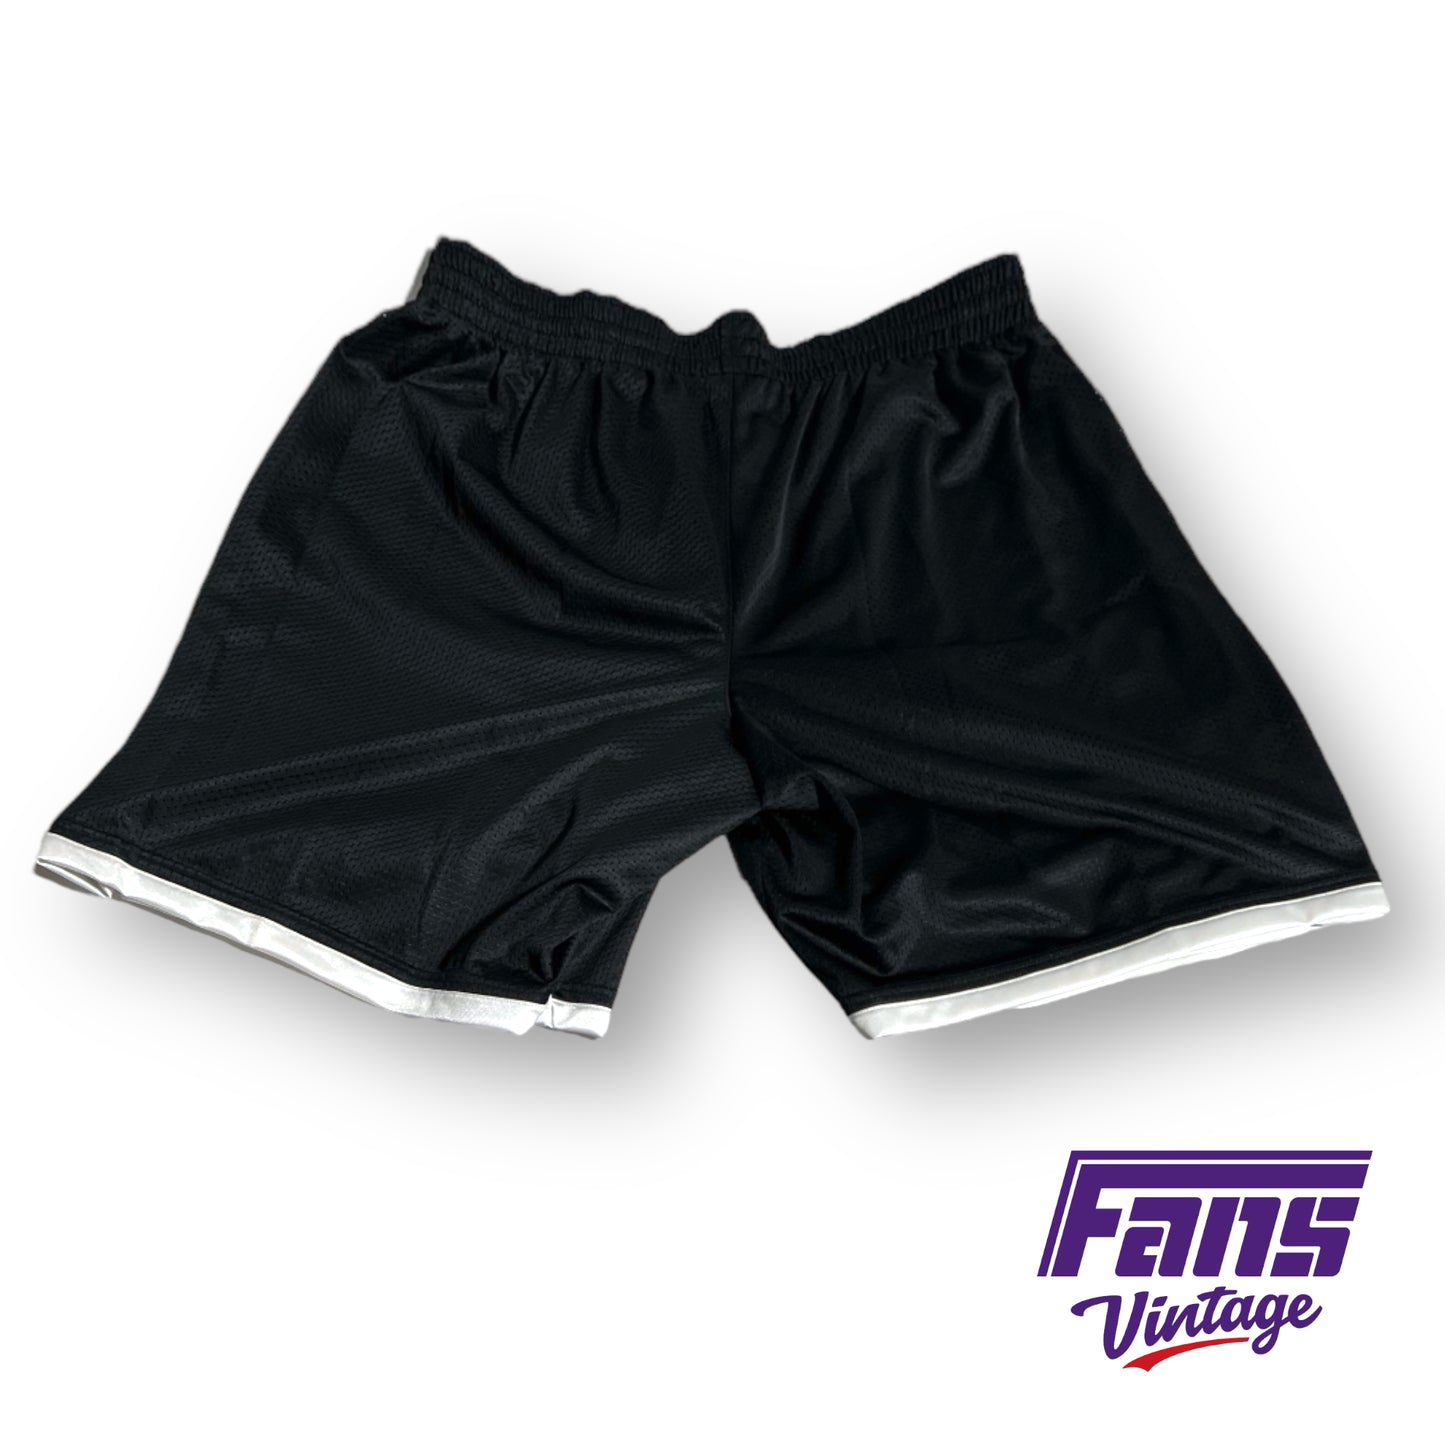 Nike TCU team issued Rose Bowl shorts